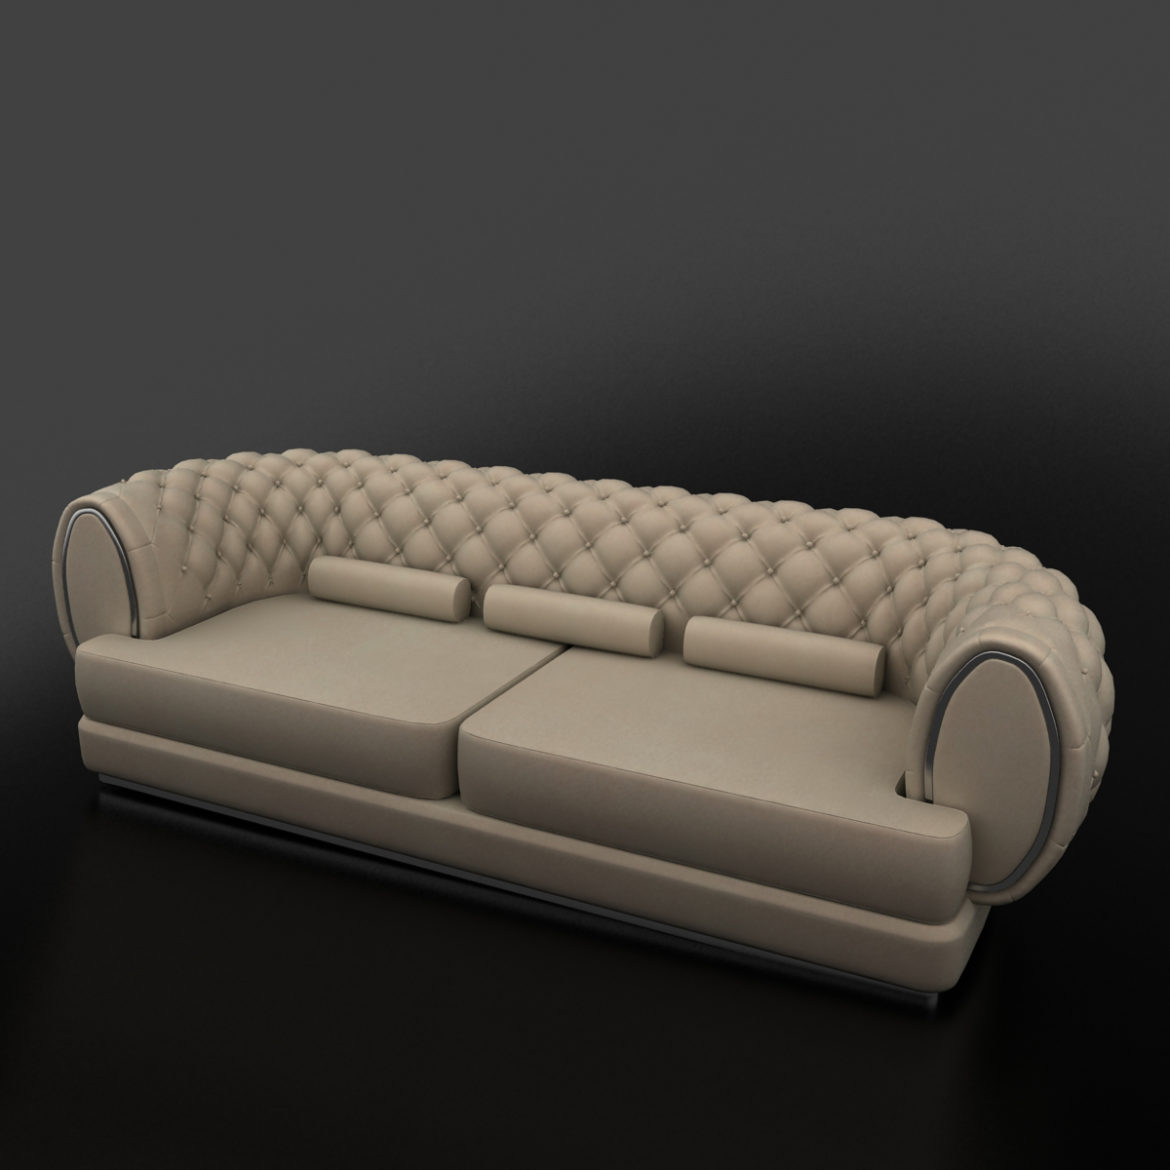 luxury sofa 3d model 3ds max fbx obj 293912